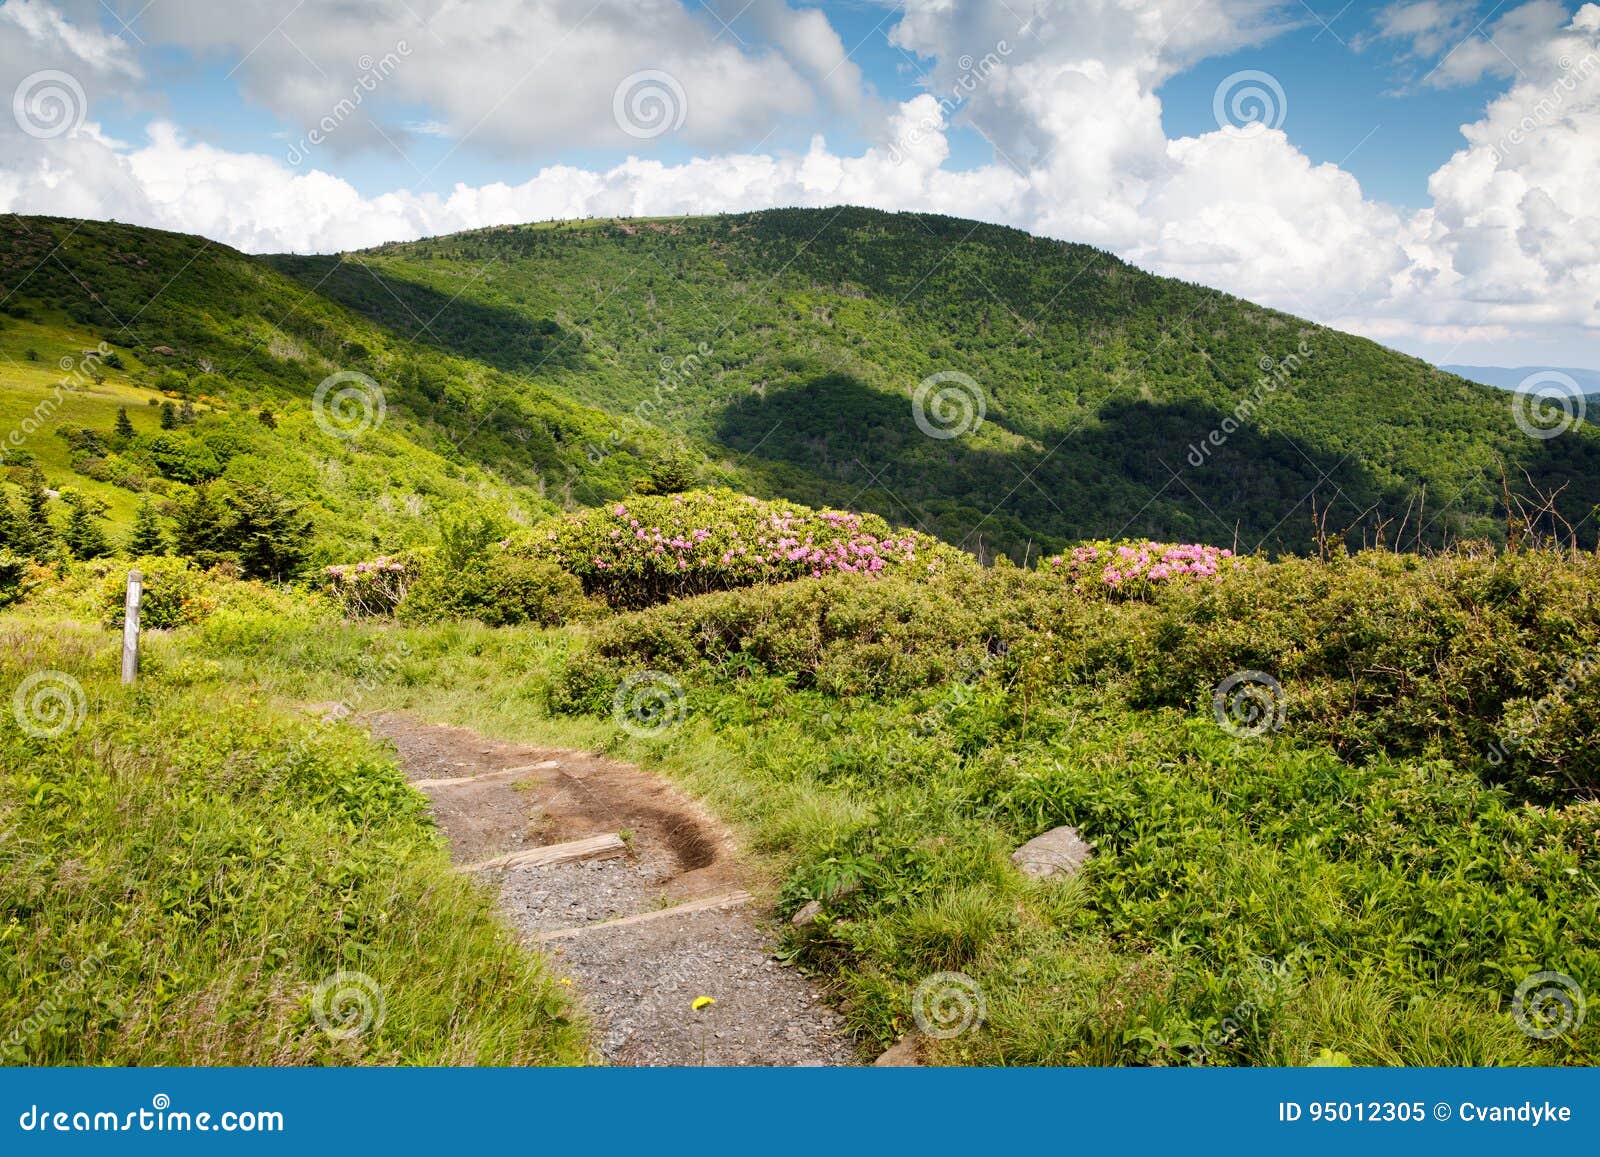 appalachian trail roan mountain tn and nc